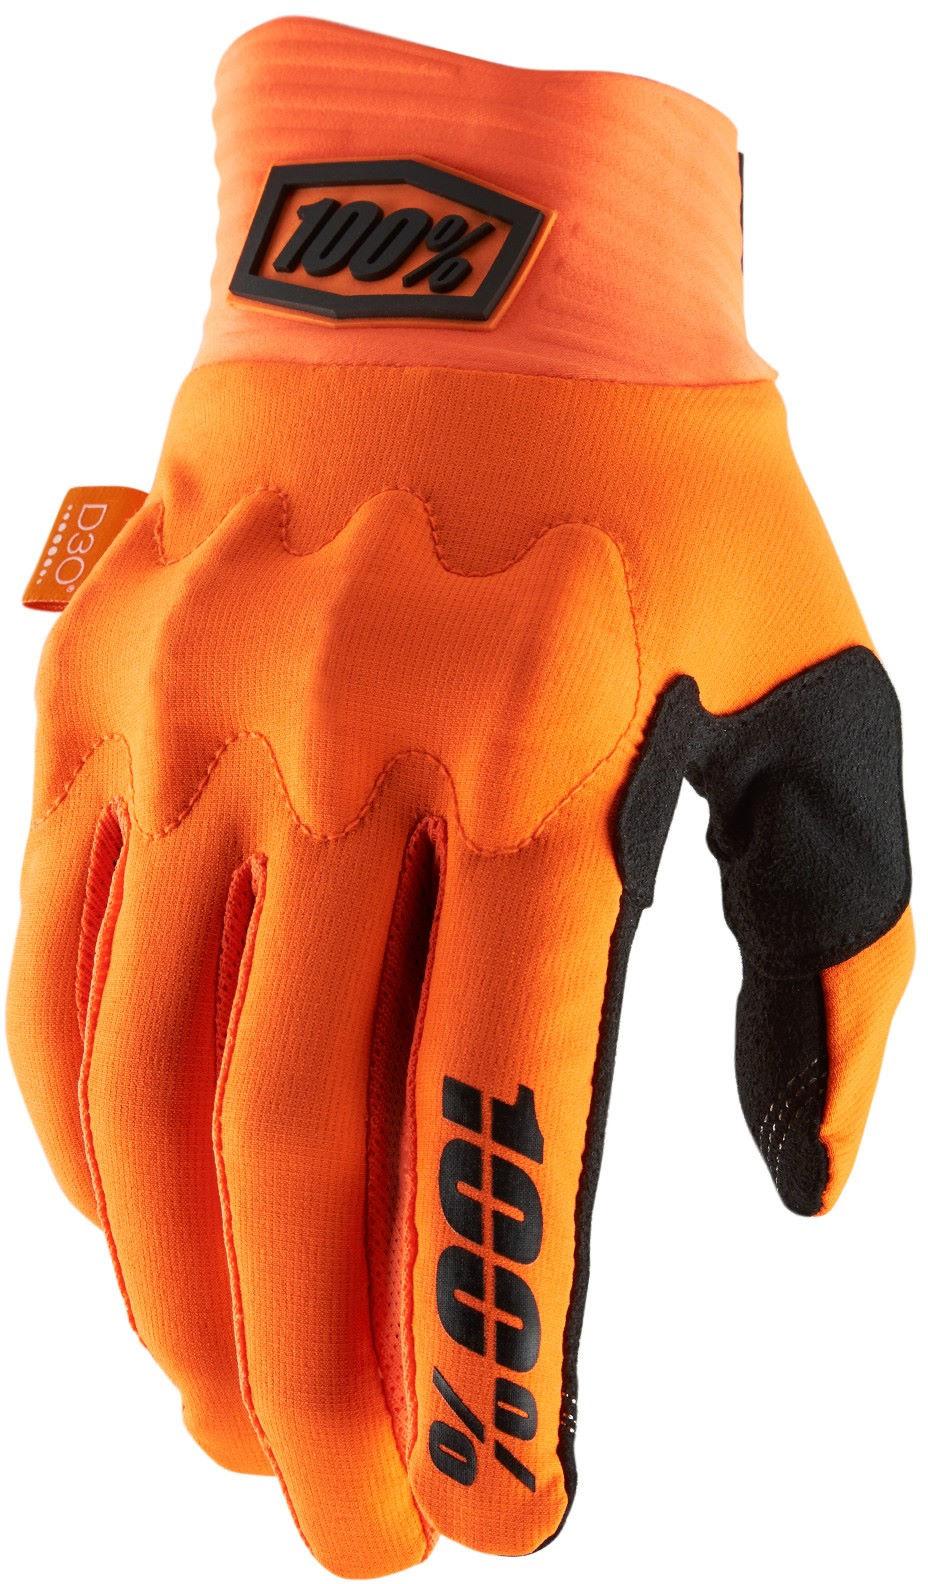 100% Cognito D3o Gloves - Orange/black